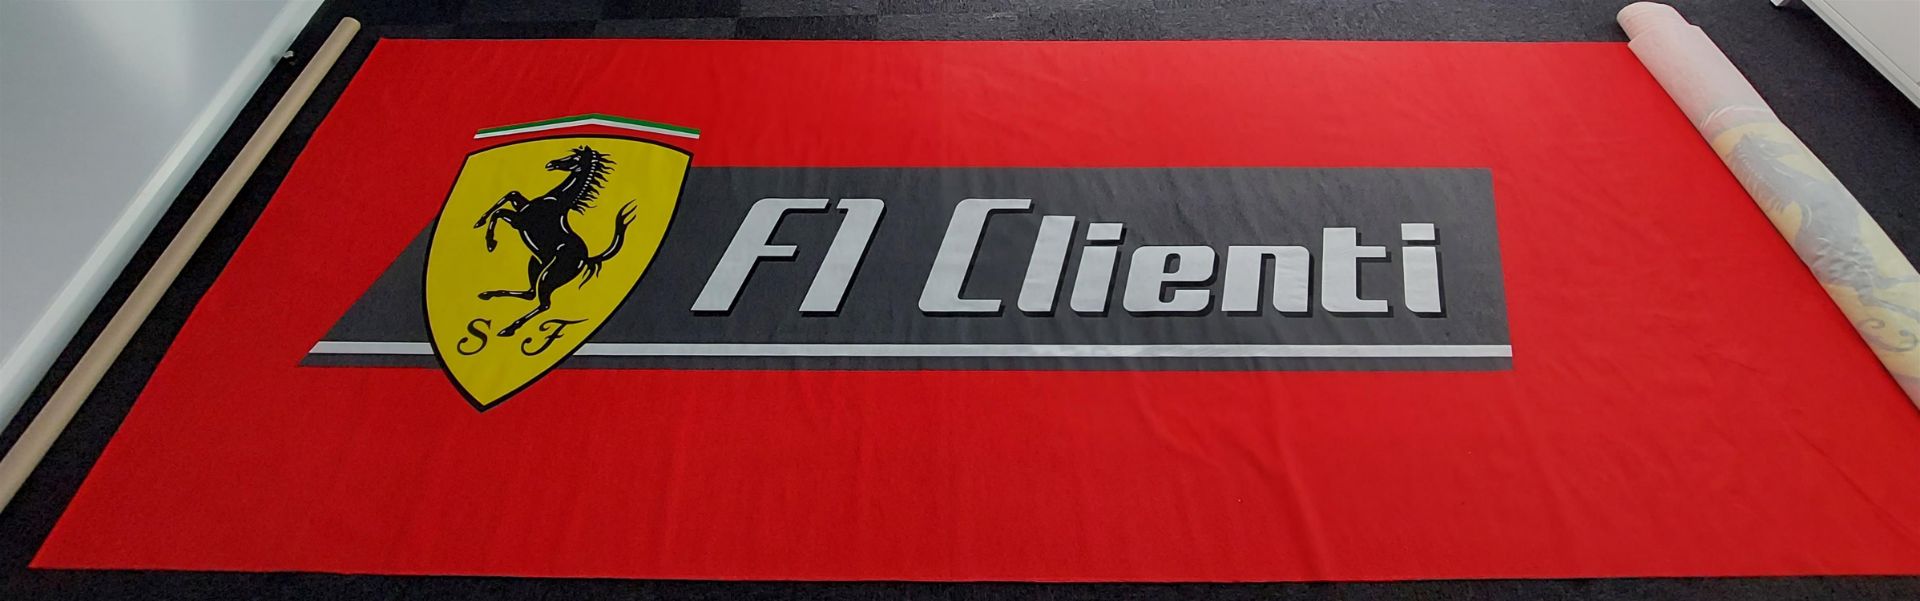 Large Ferrari Formula 1 Clienti Banner